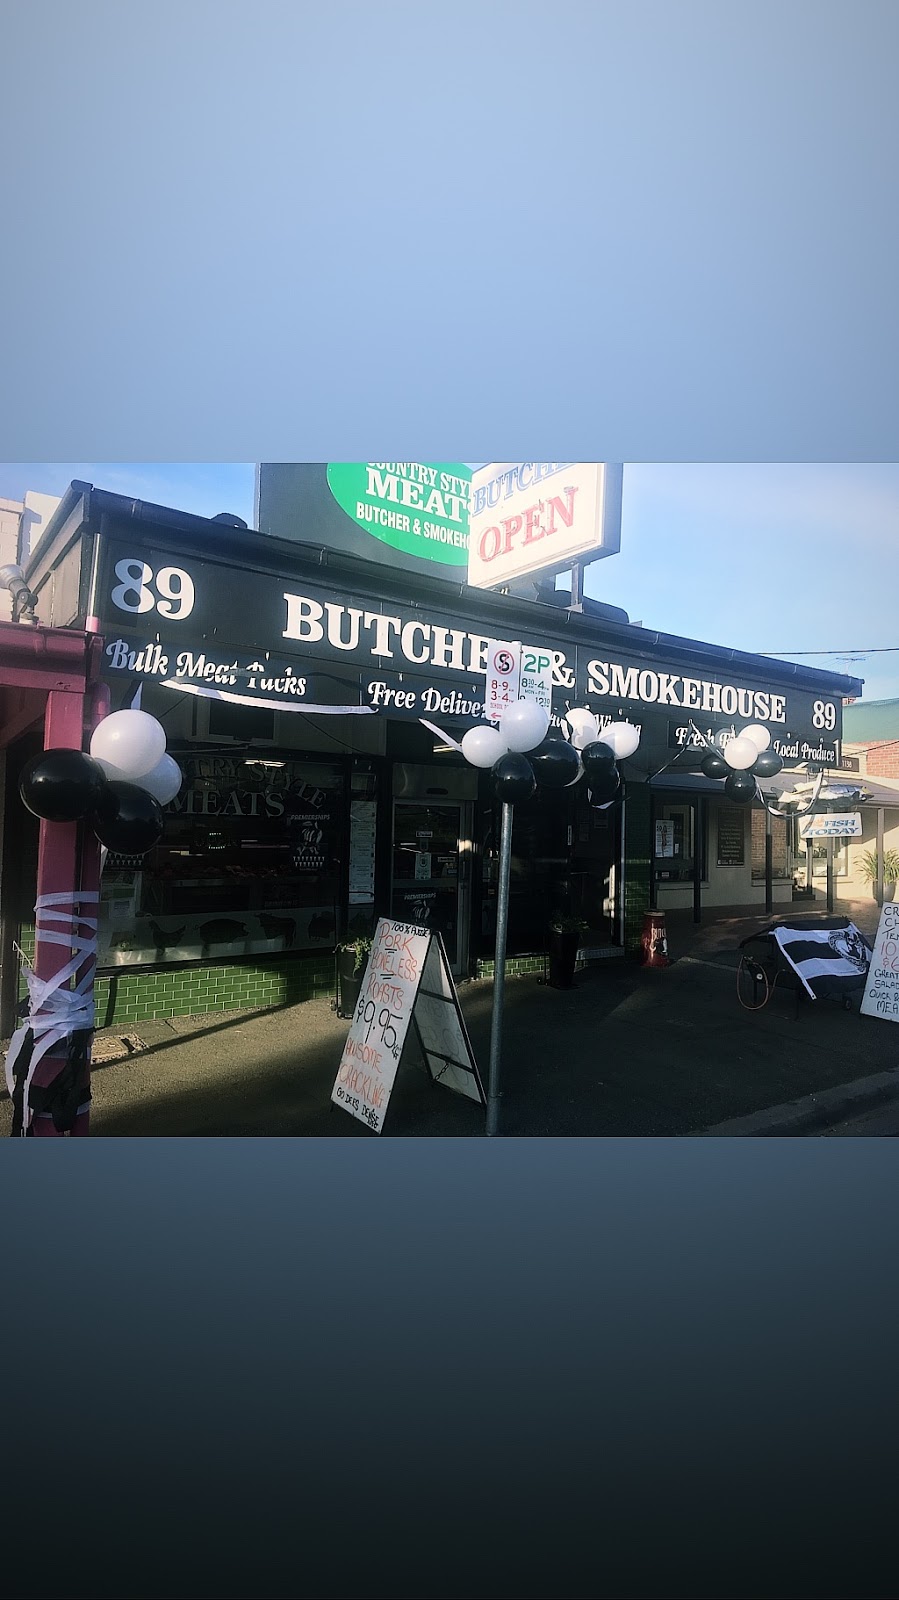 Country Style Meats. Butcher & Smokehouse | 89 Nar Nar Goon - Longwarry Rd, Garfield VIC 3814, Australia | Phone: (03) 5629 2593